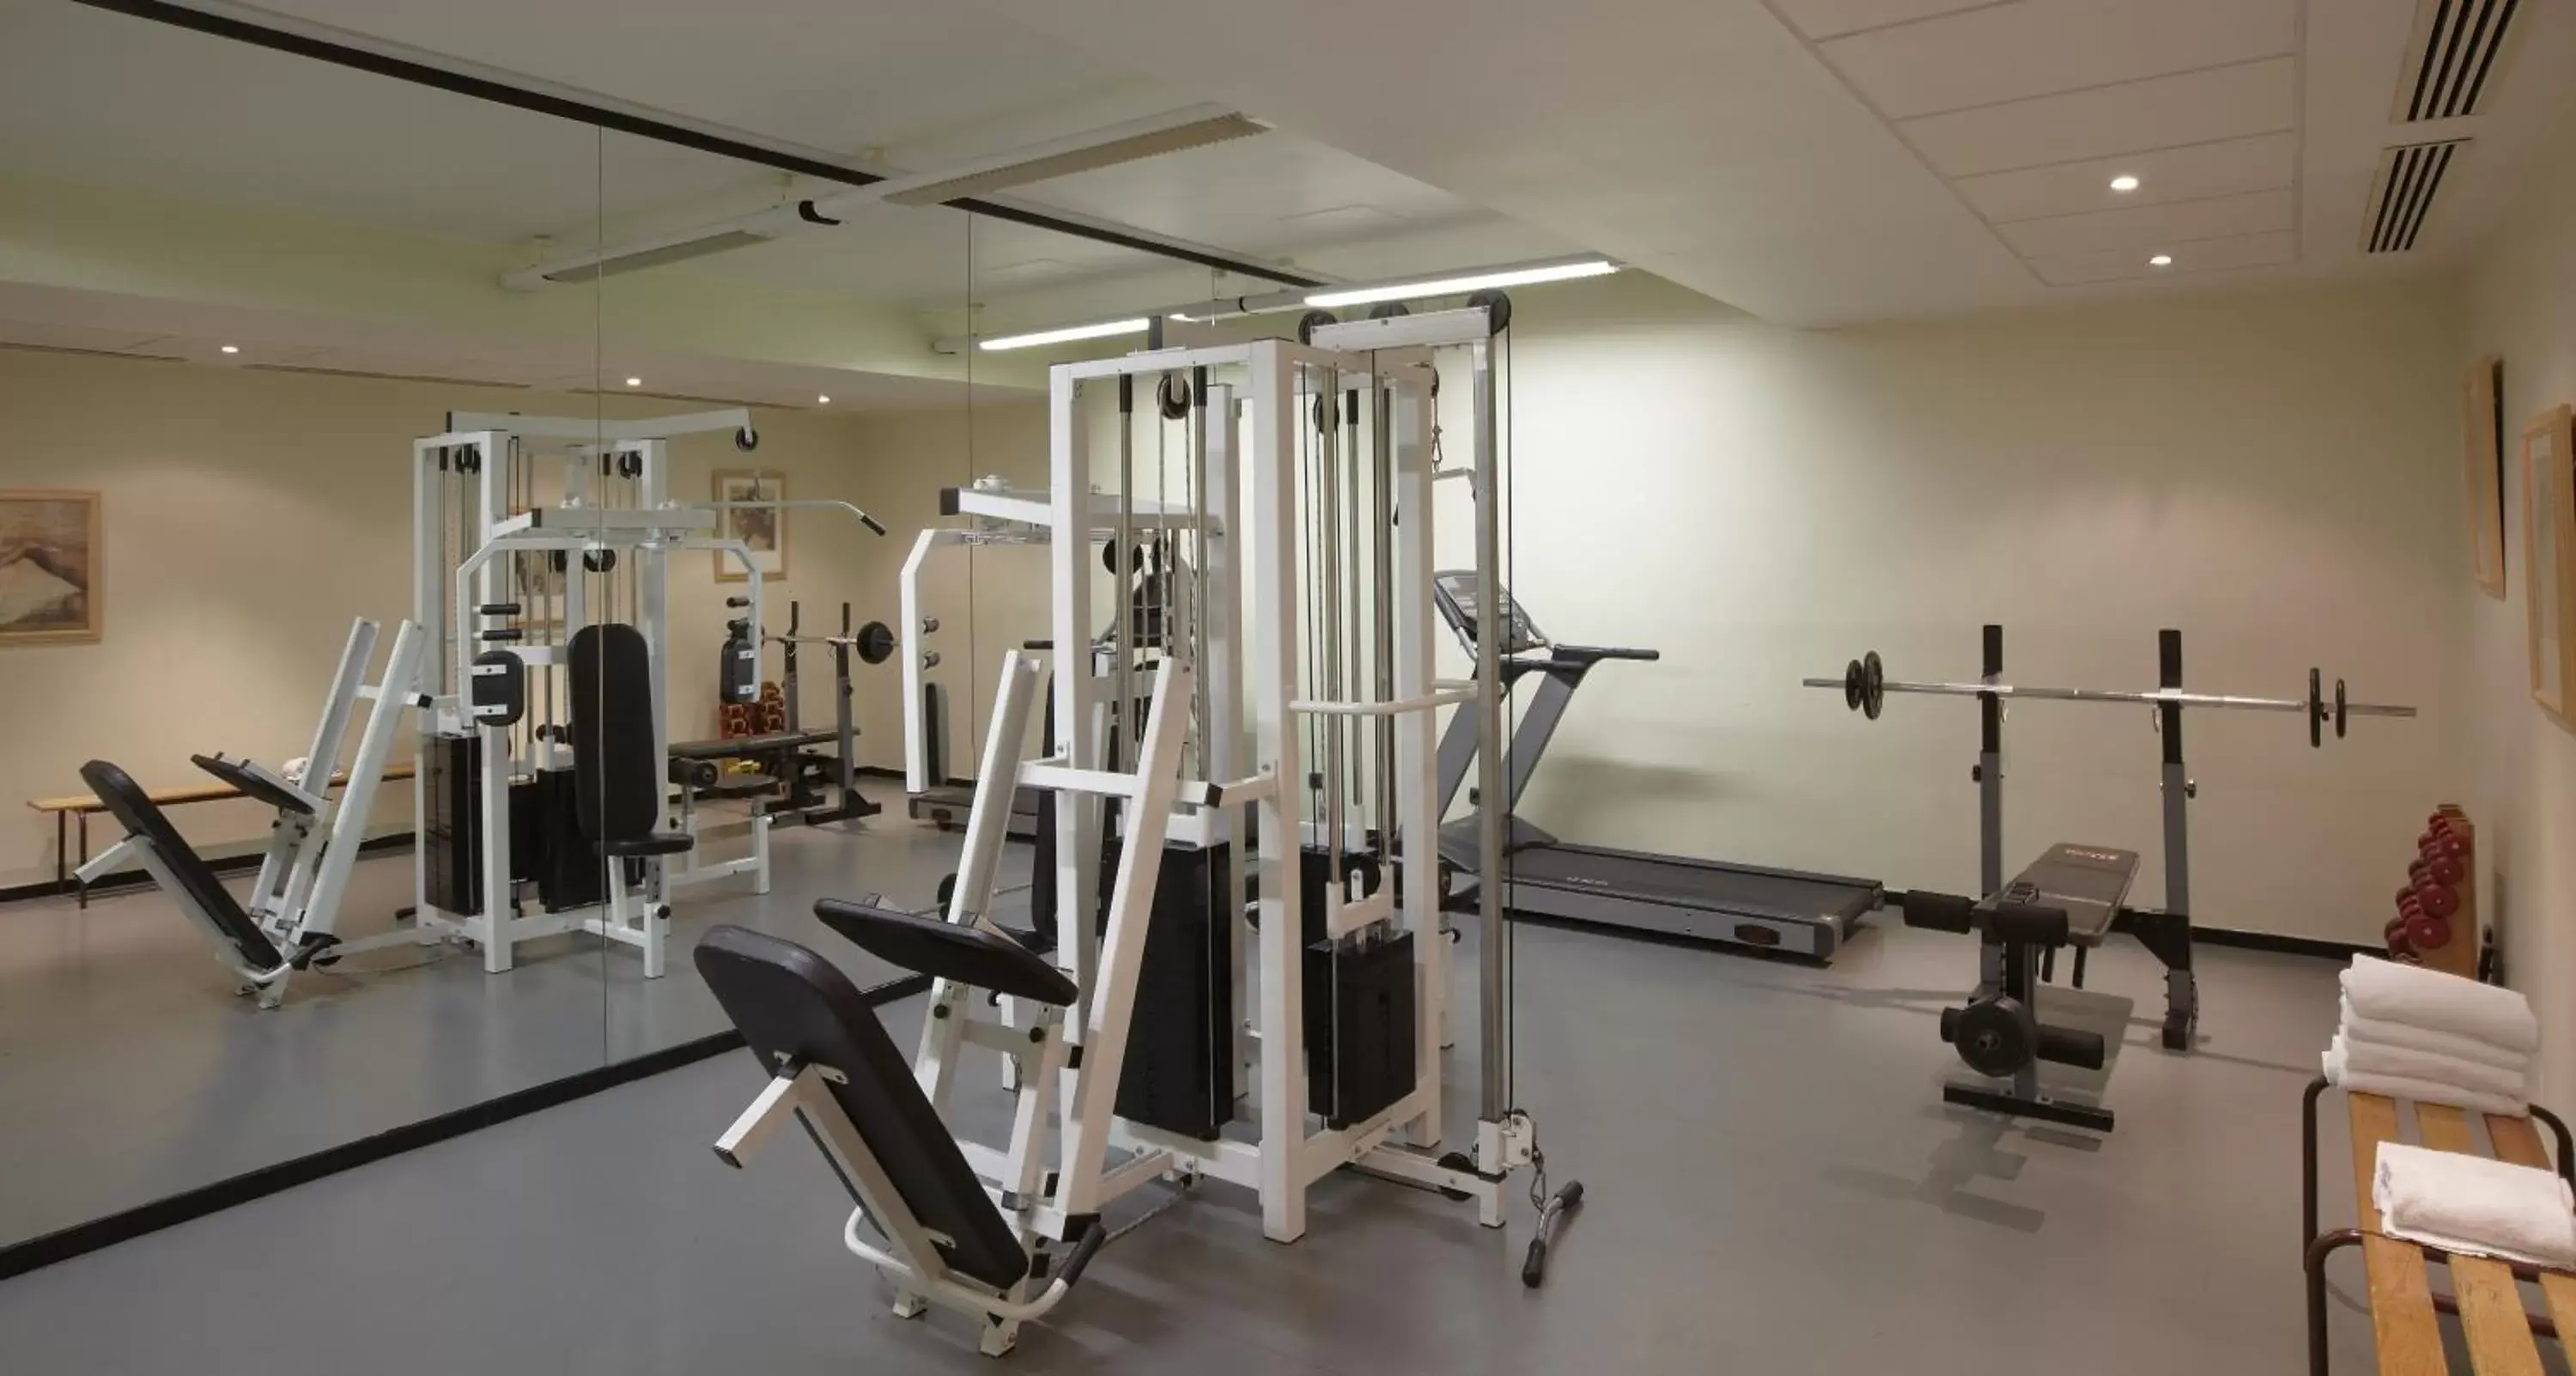 Fitness centre/facilities, Fitness Center/Facilities in Citadines Opéra Paris